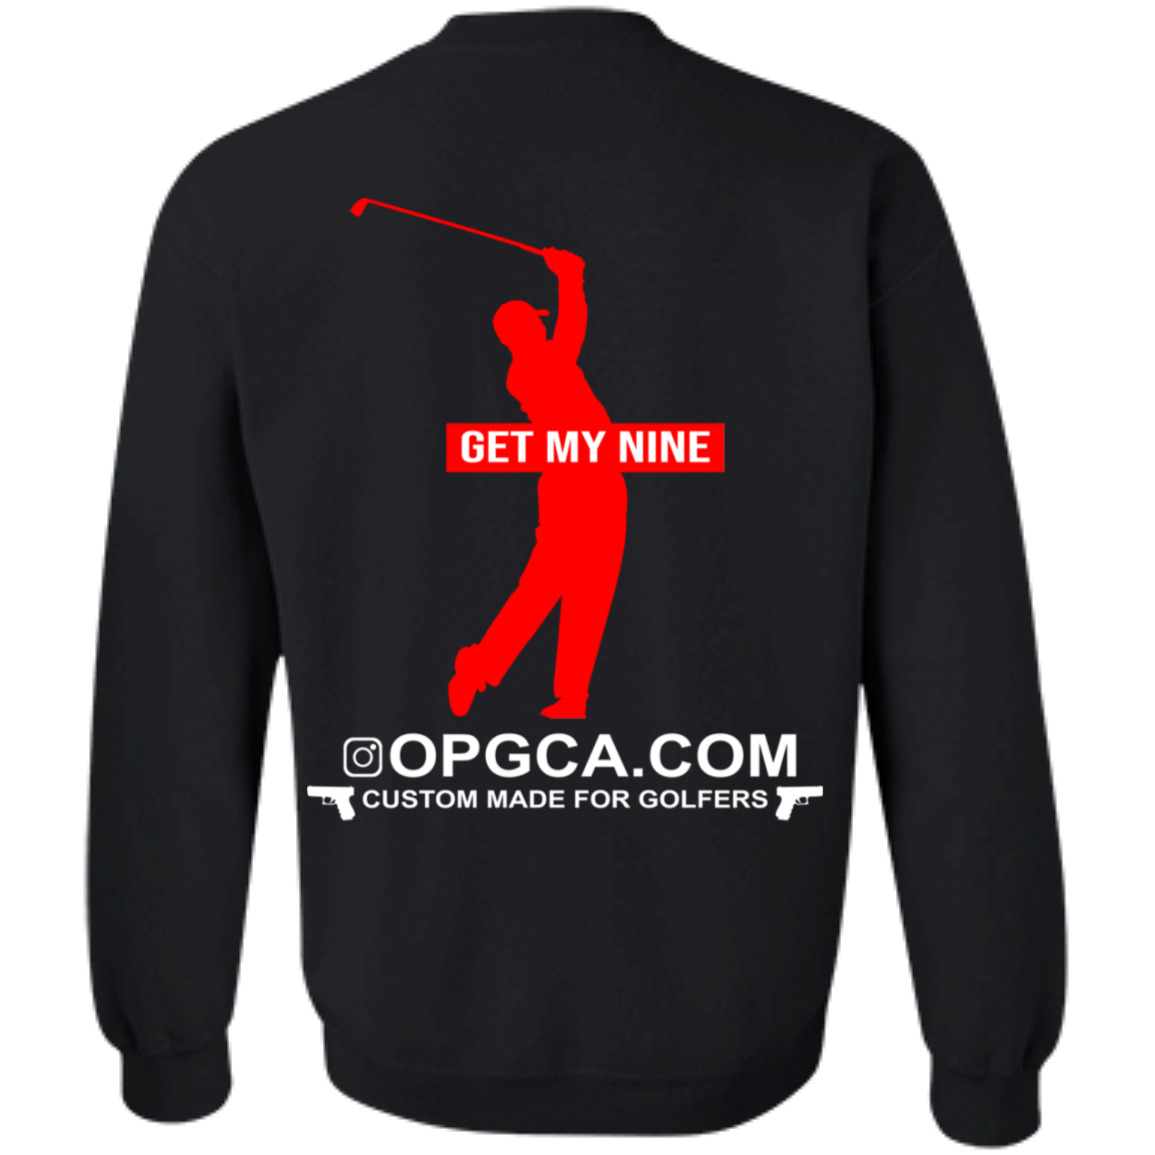 OPG Custom Design #16. Get my nine. Crewneck Pullover Sweatshirt